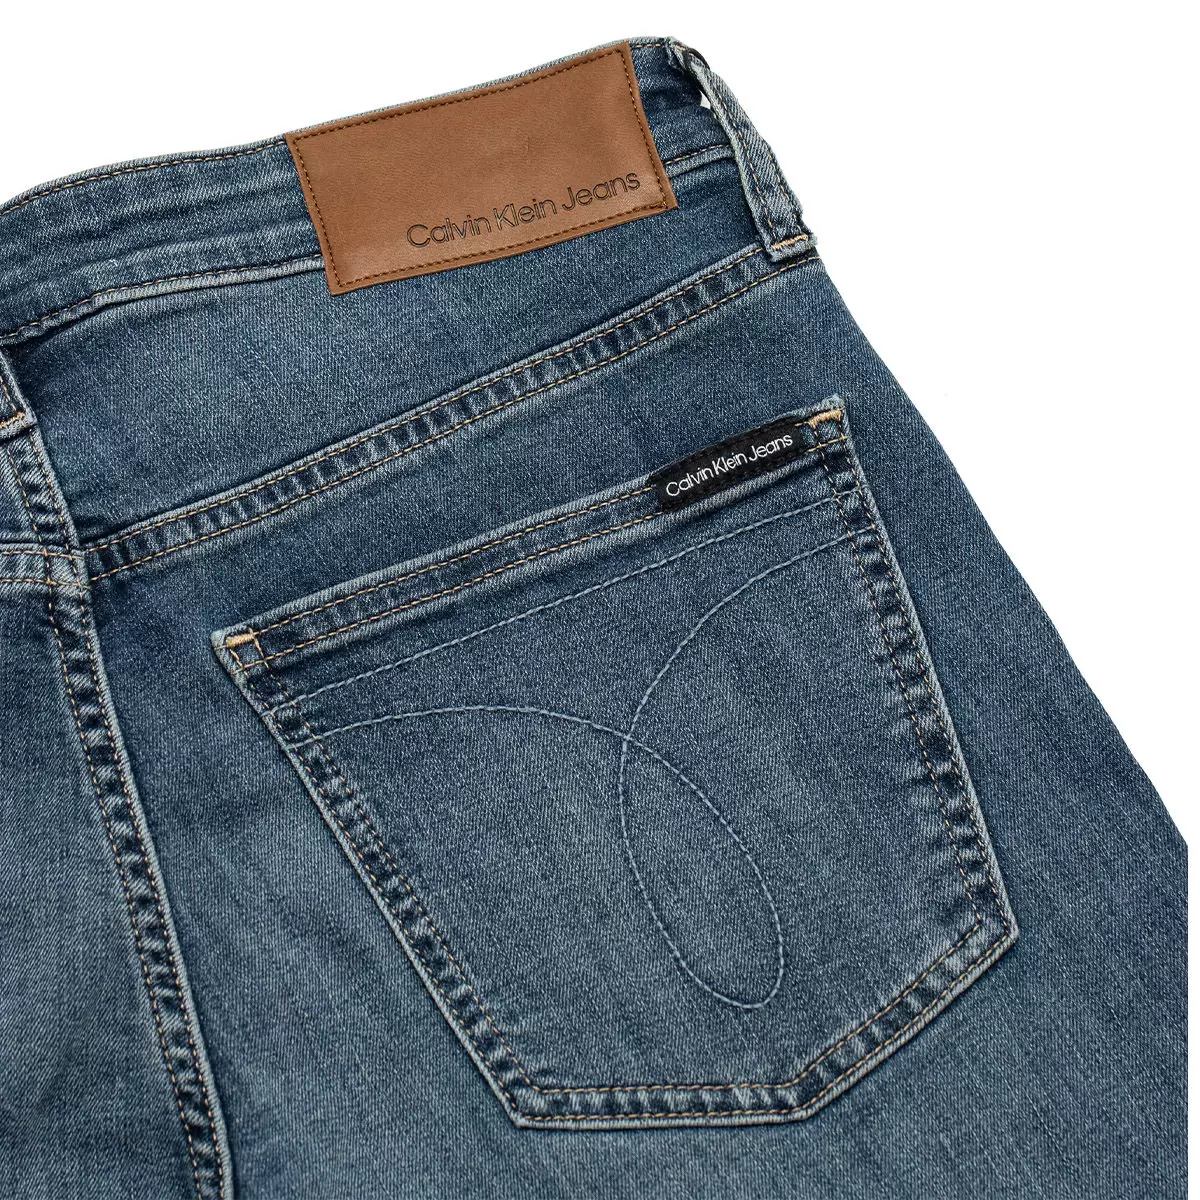 Calvin Klein Jeans 男彈性修身牛仔褲 腰圍 31吋 X 褲長 30吋